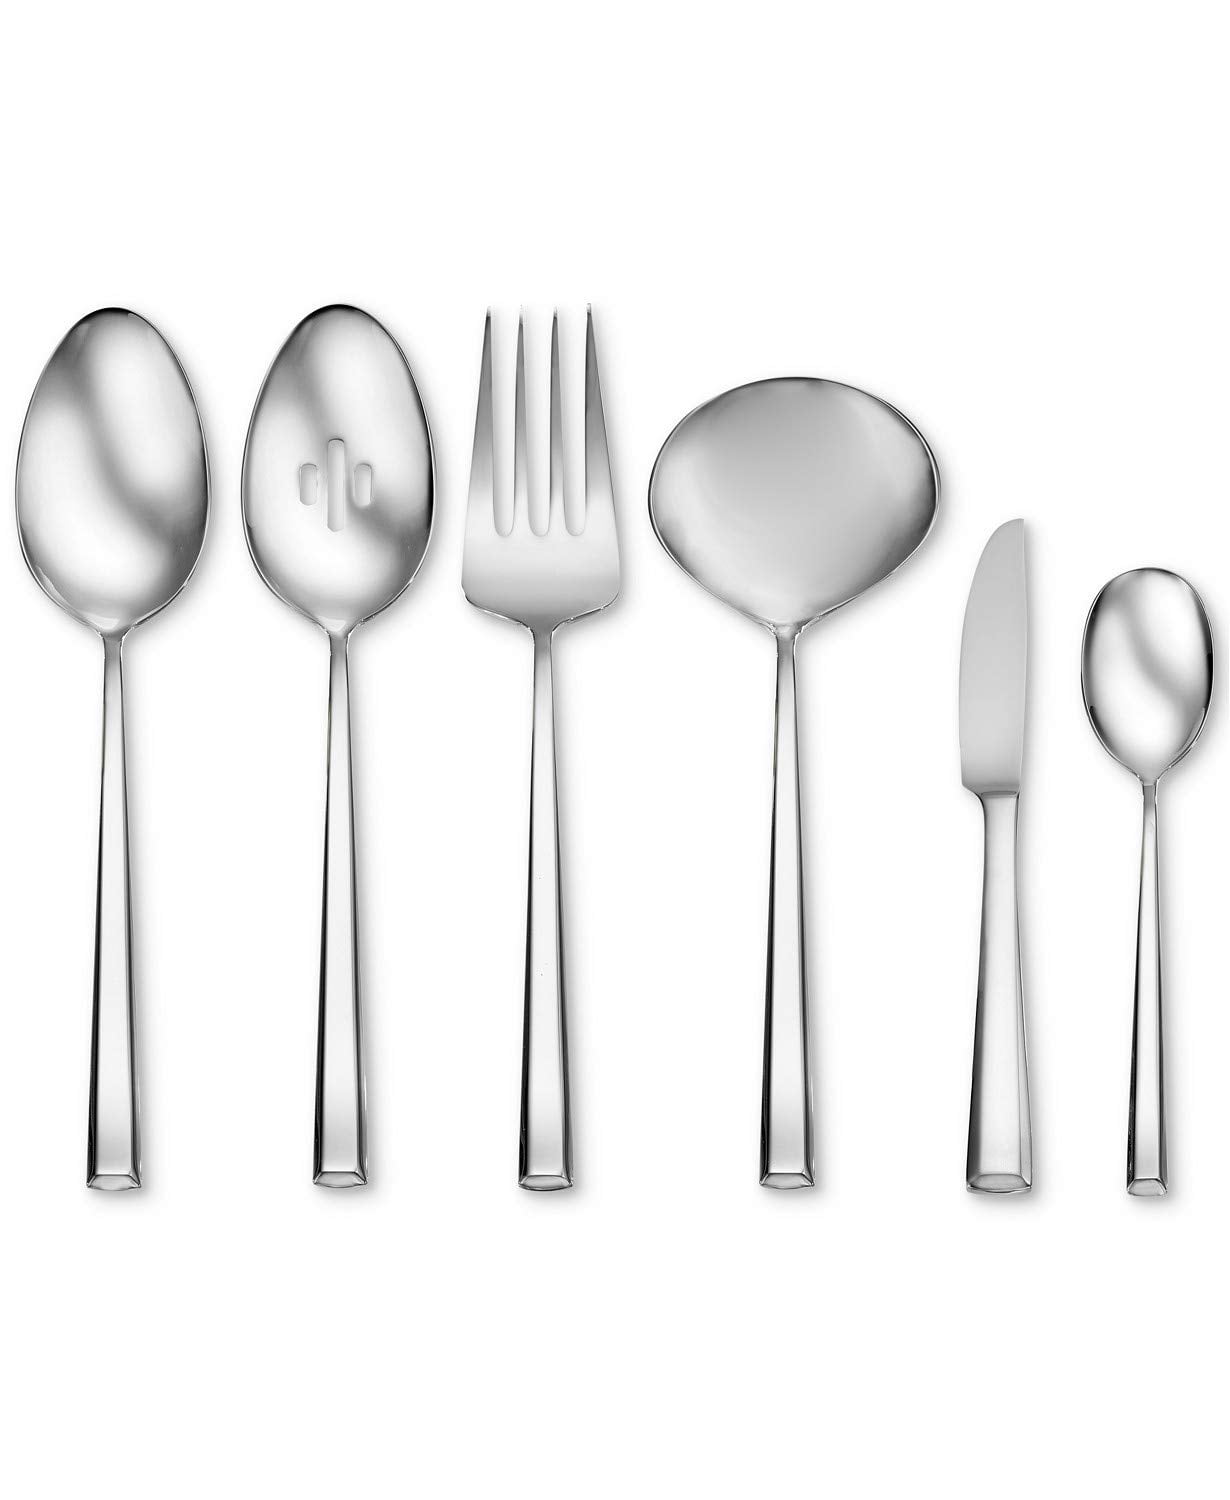 1 Oneida majorca stainless steel serving spoon